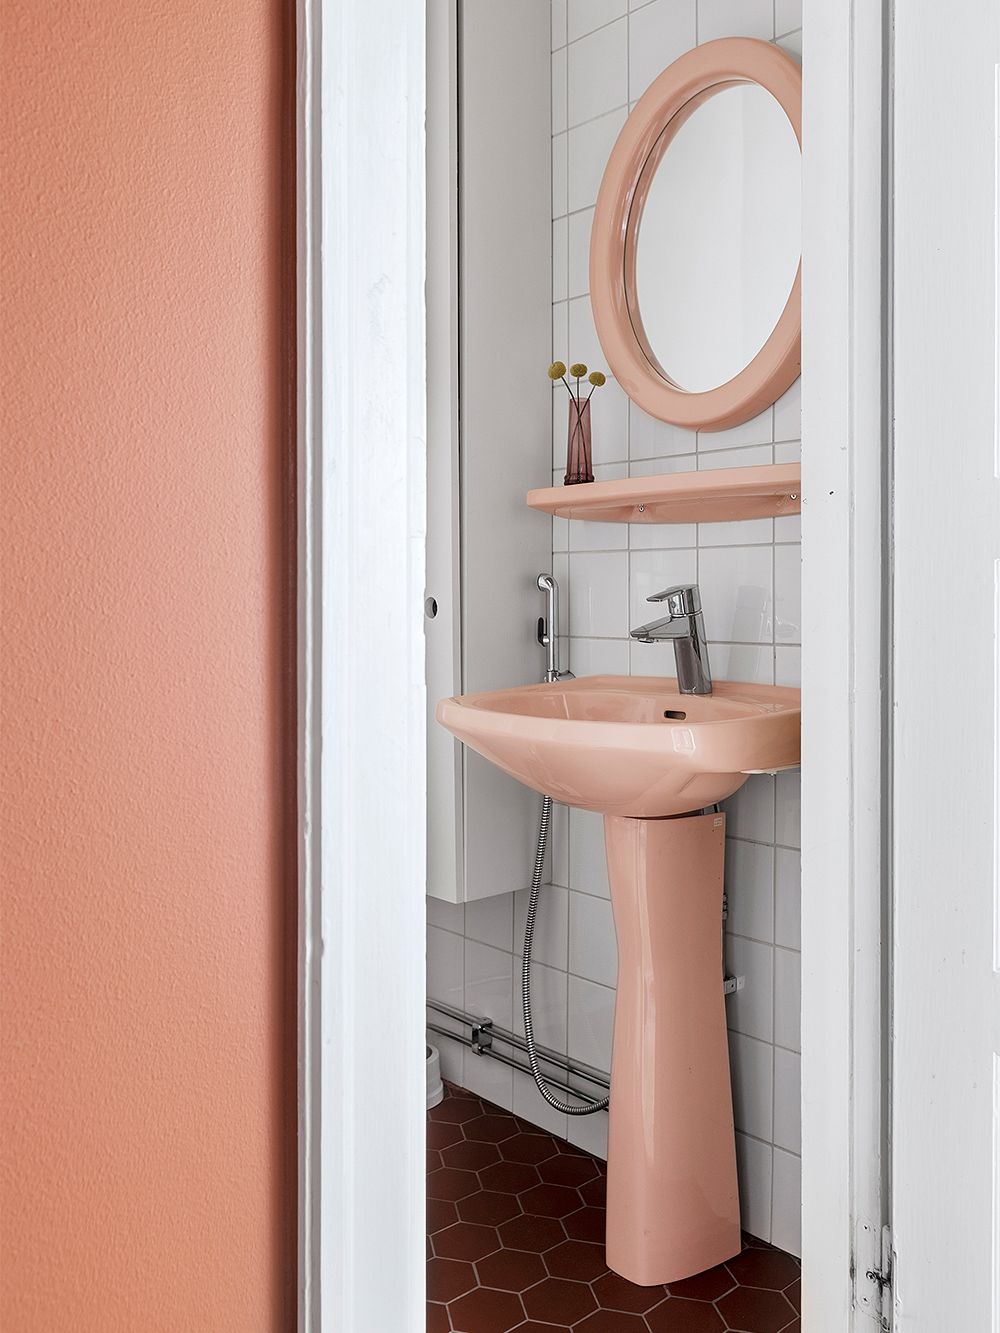 Rose-colored bathroom